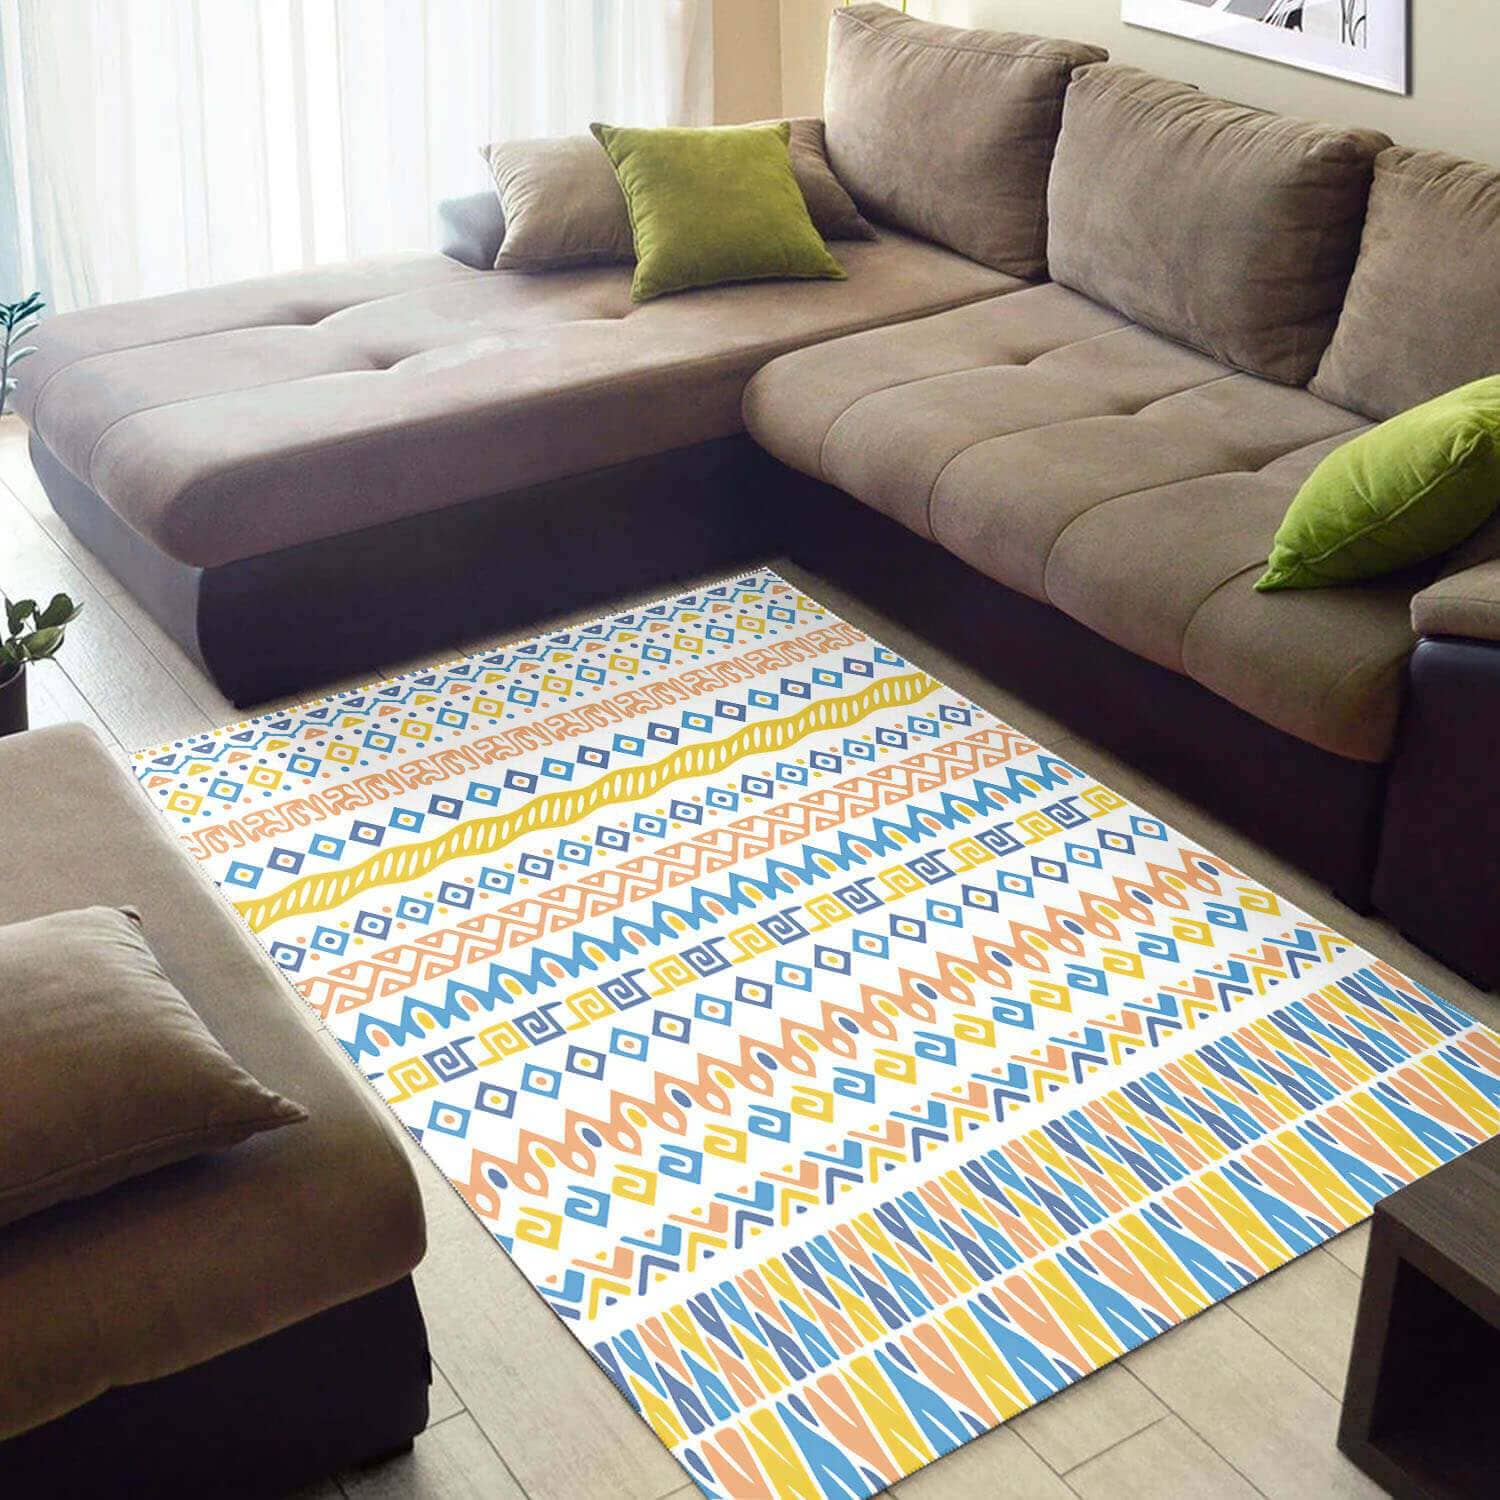 Beautiful African Trendy Natural Hair Ethnic Seamless Pattern Design Floor Carpet Inspired Living Room Rug